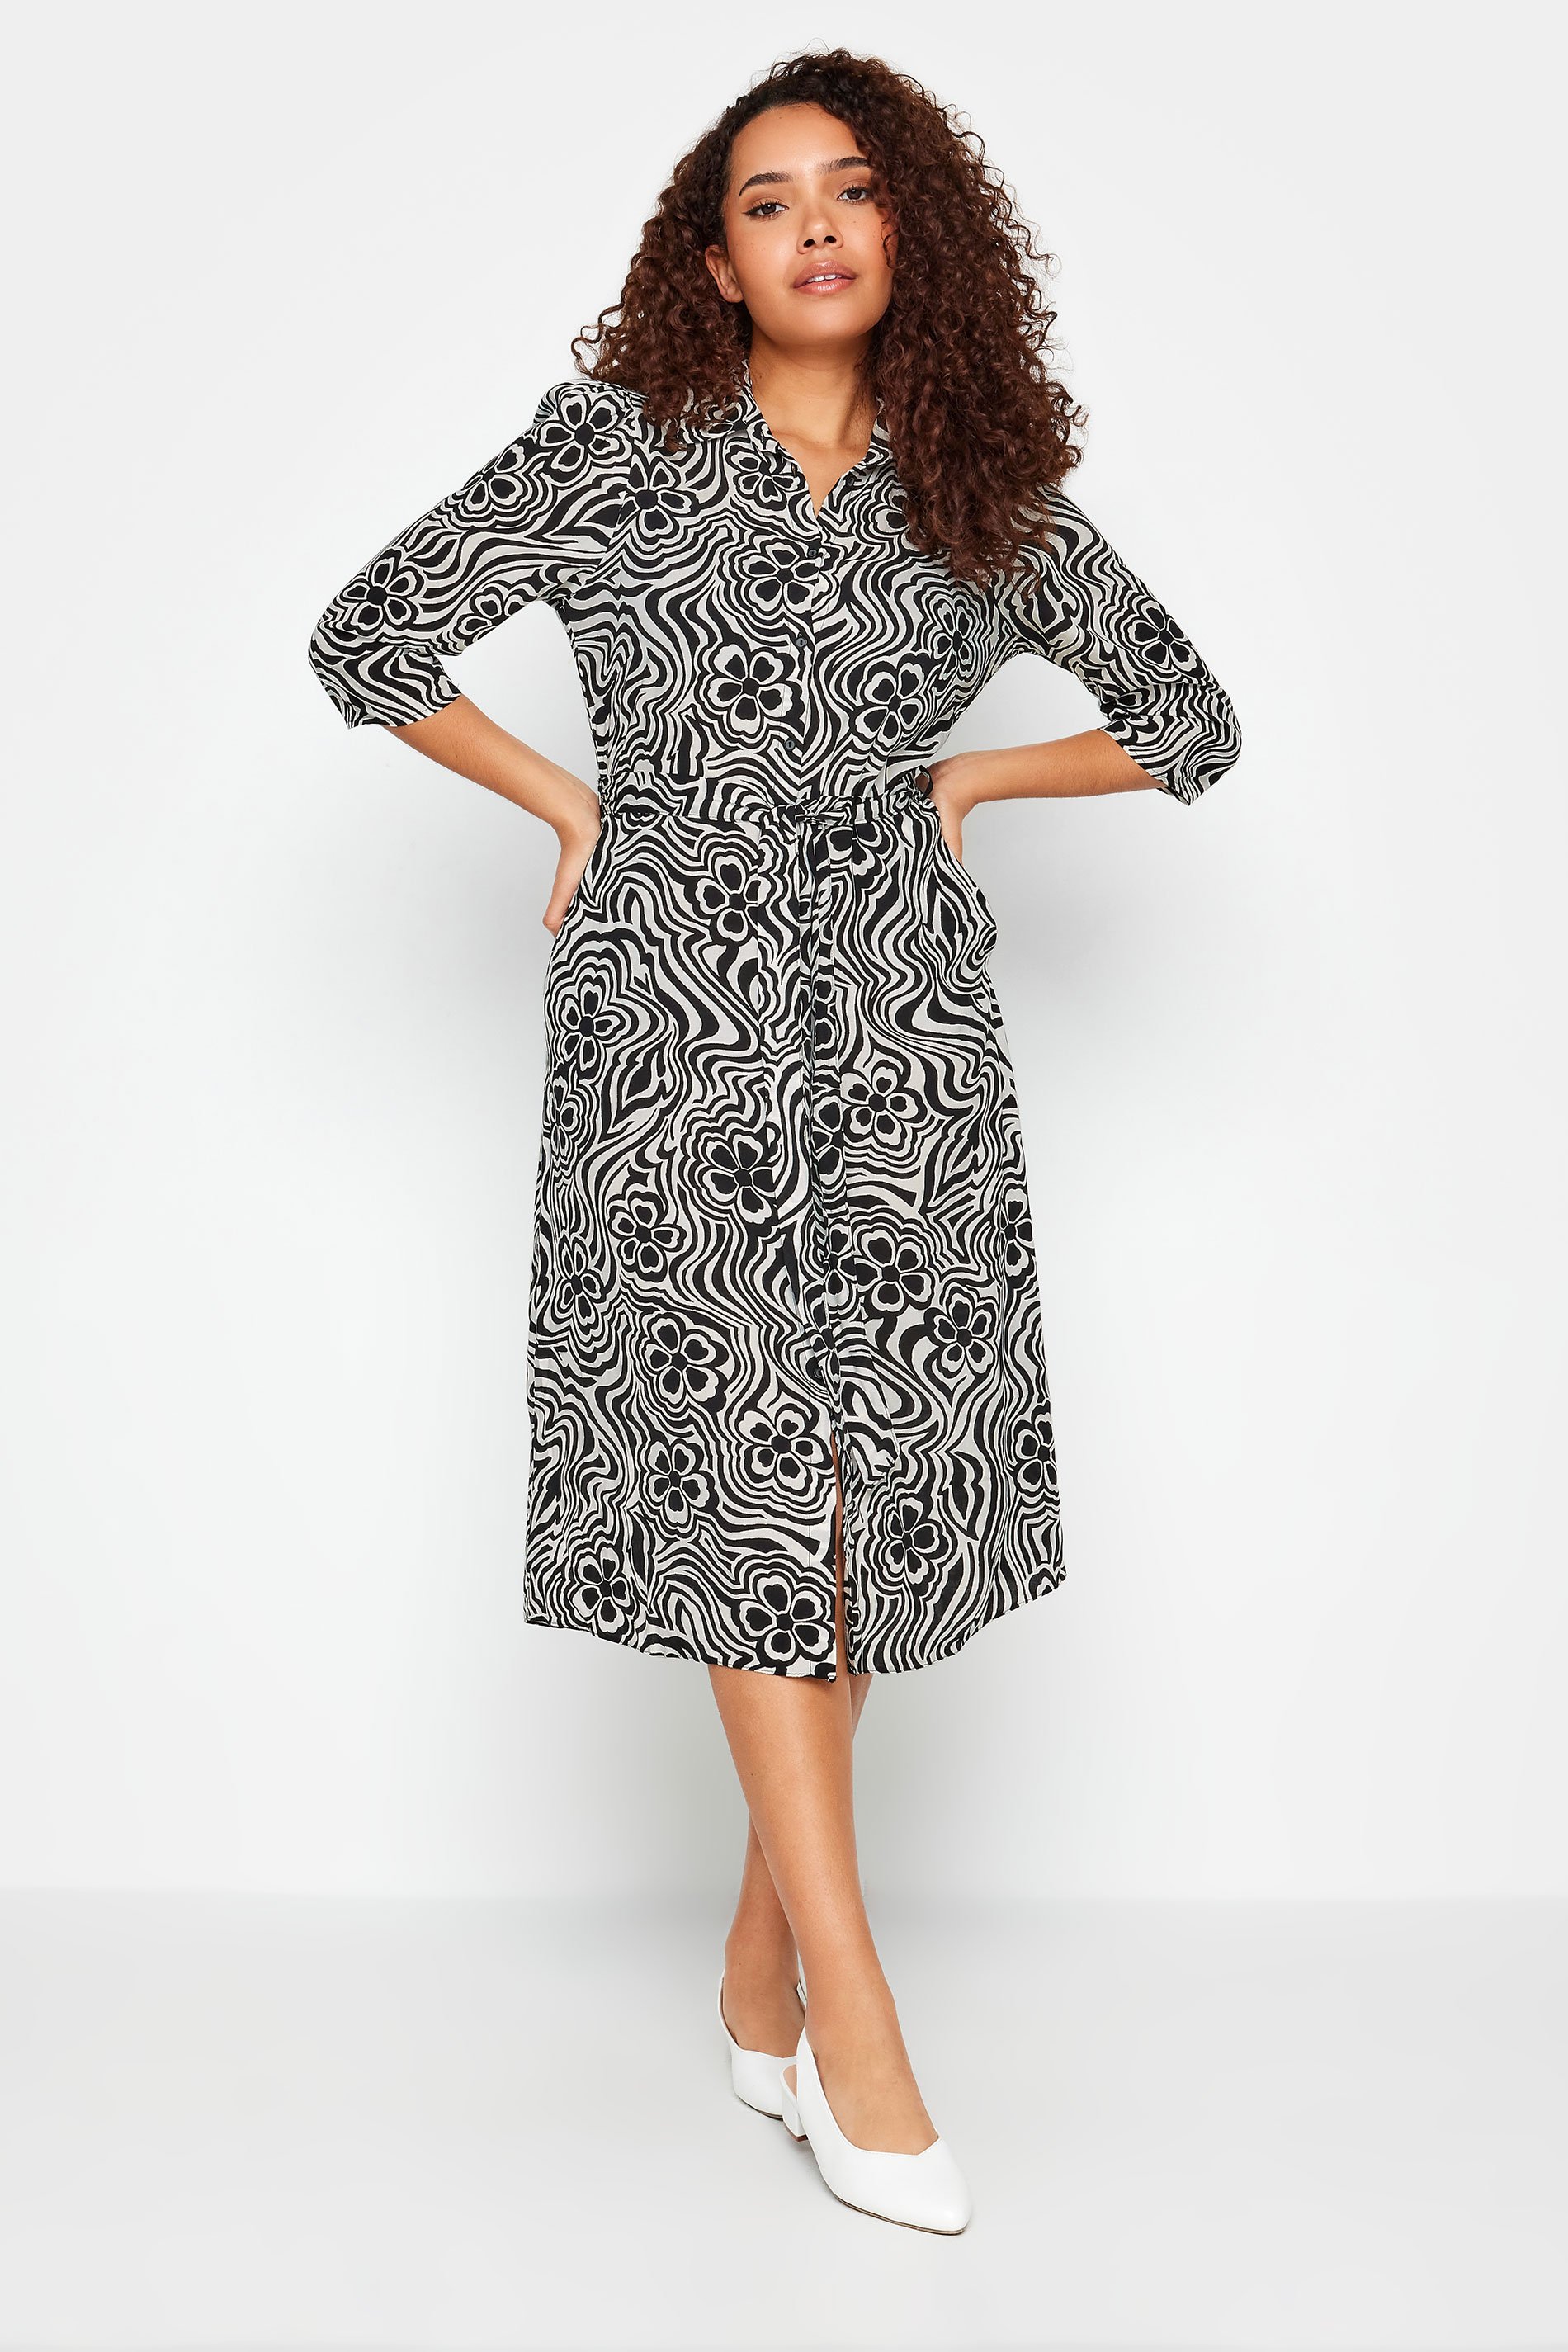 M&Co Black Floral Swirl Print Midi Shirt Dress | M&Co 2